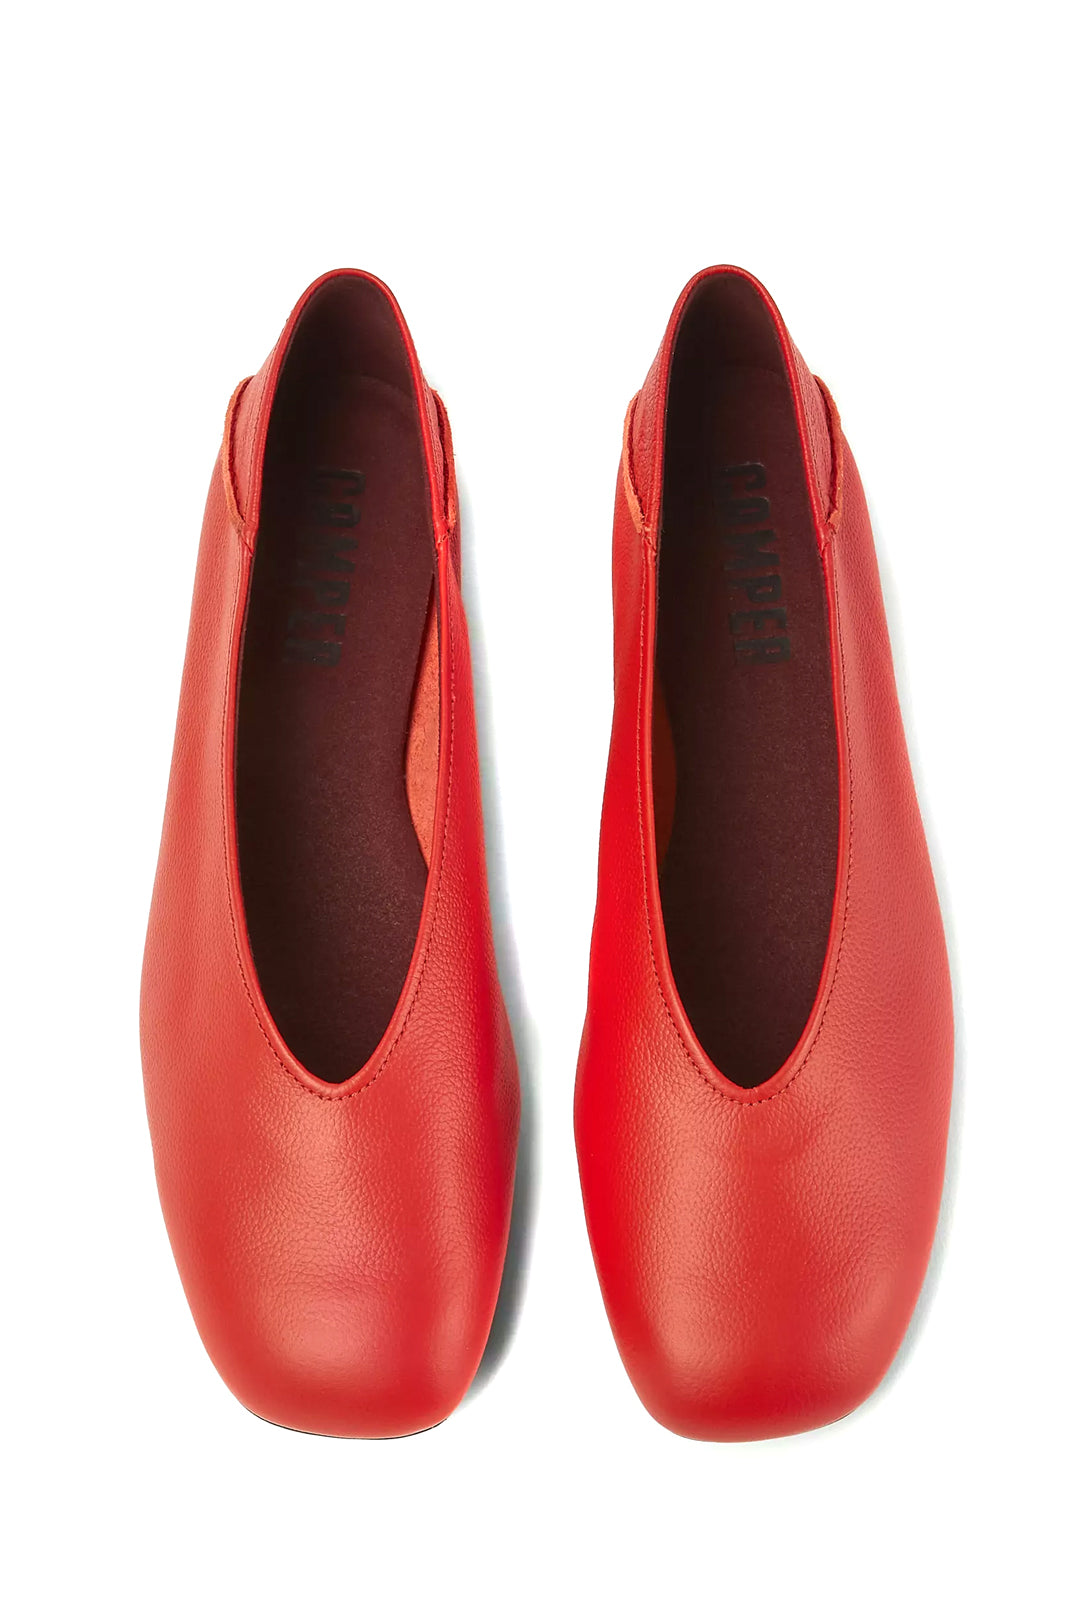 Camper Myra Ballet Shoes, Red